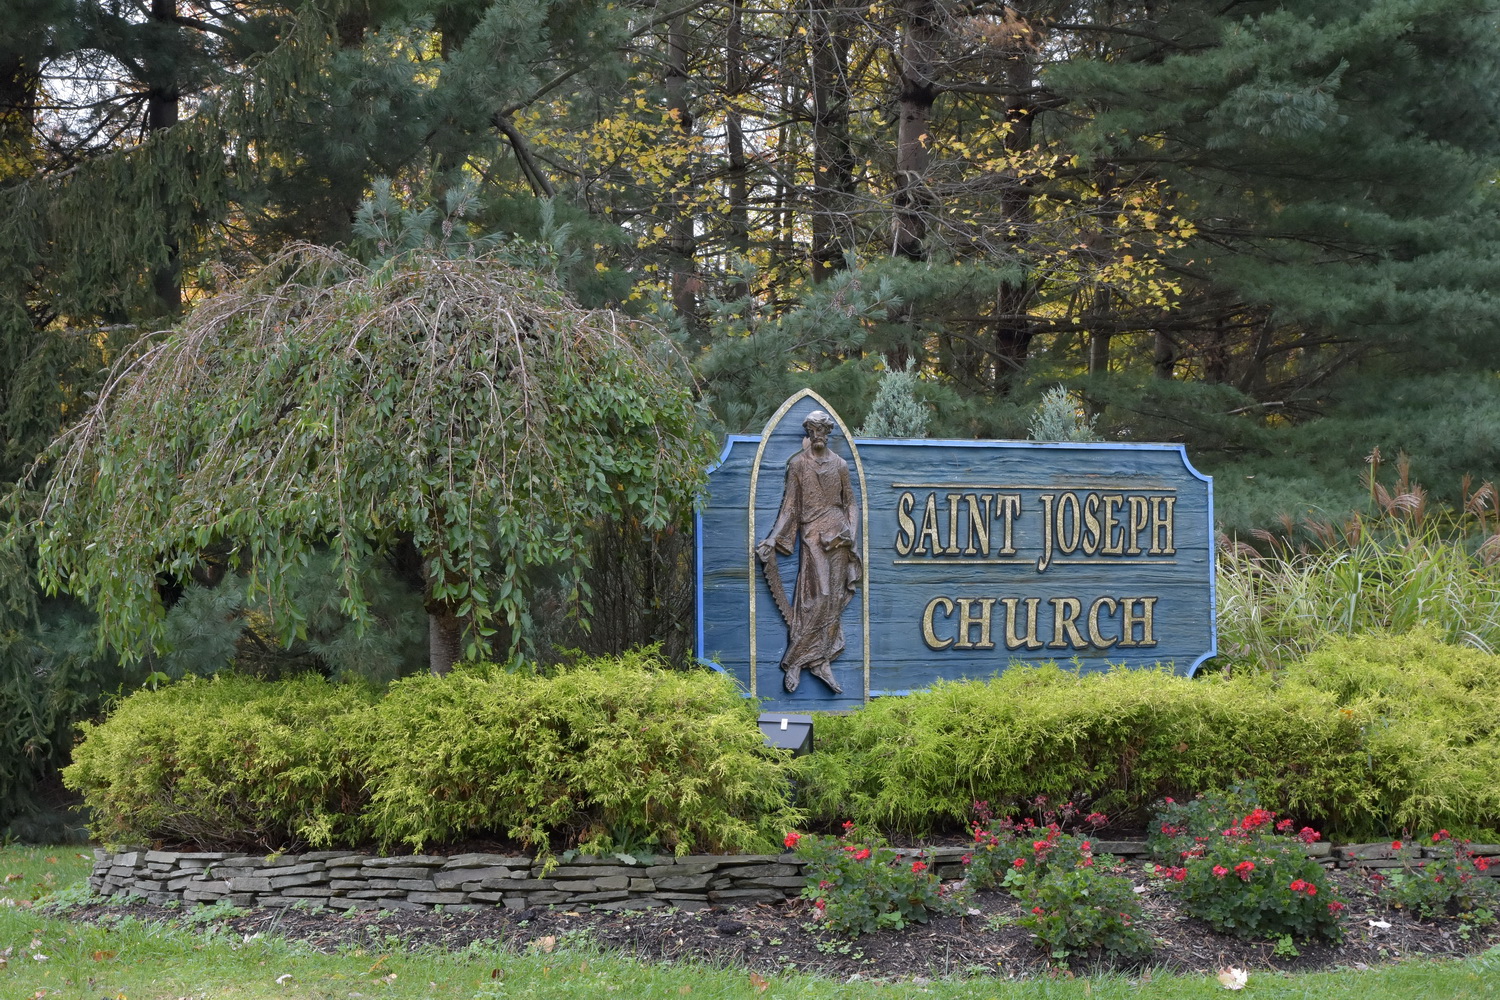 Sign for St. Joseph Church in Mantua, Ohio